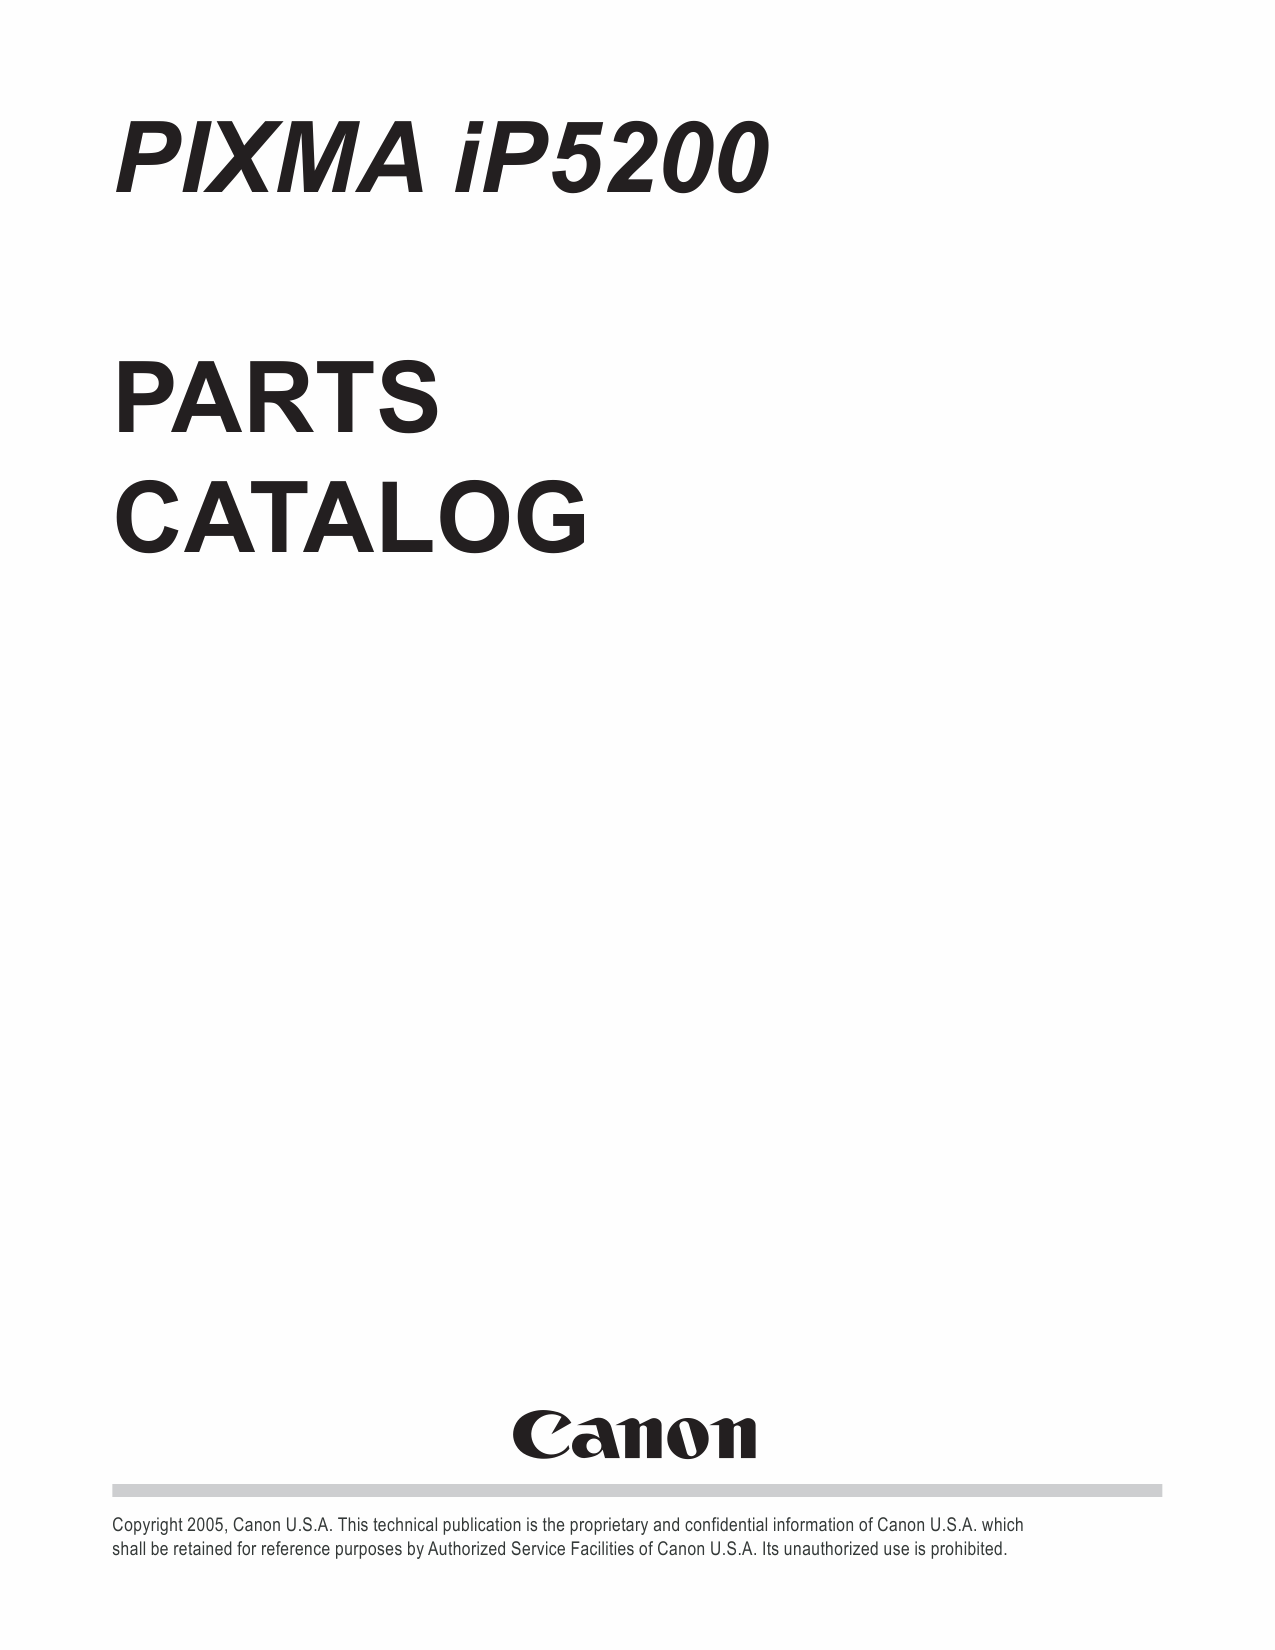 Canon PIXMA iP5200 Parts Catalog-1